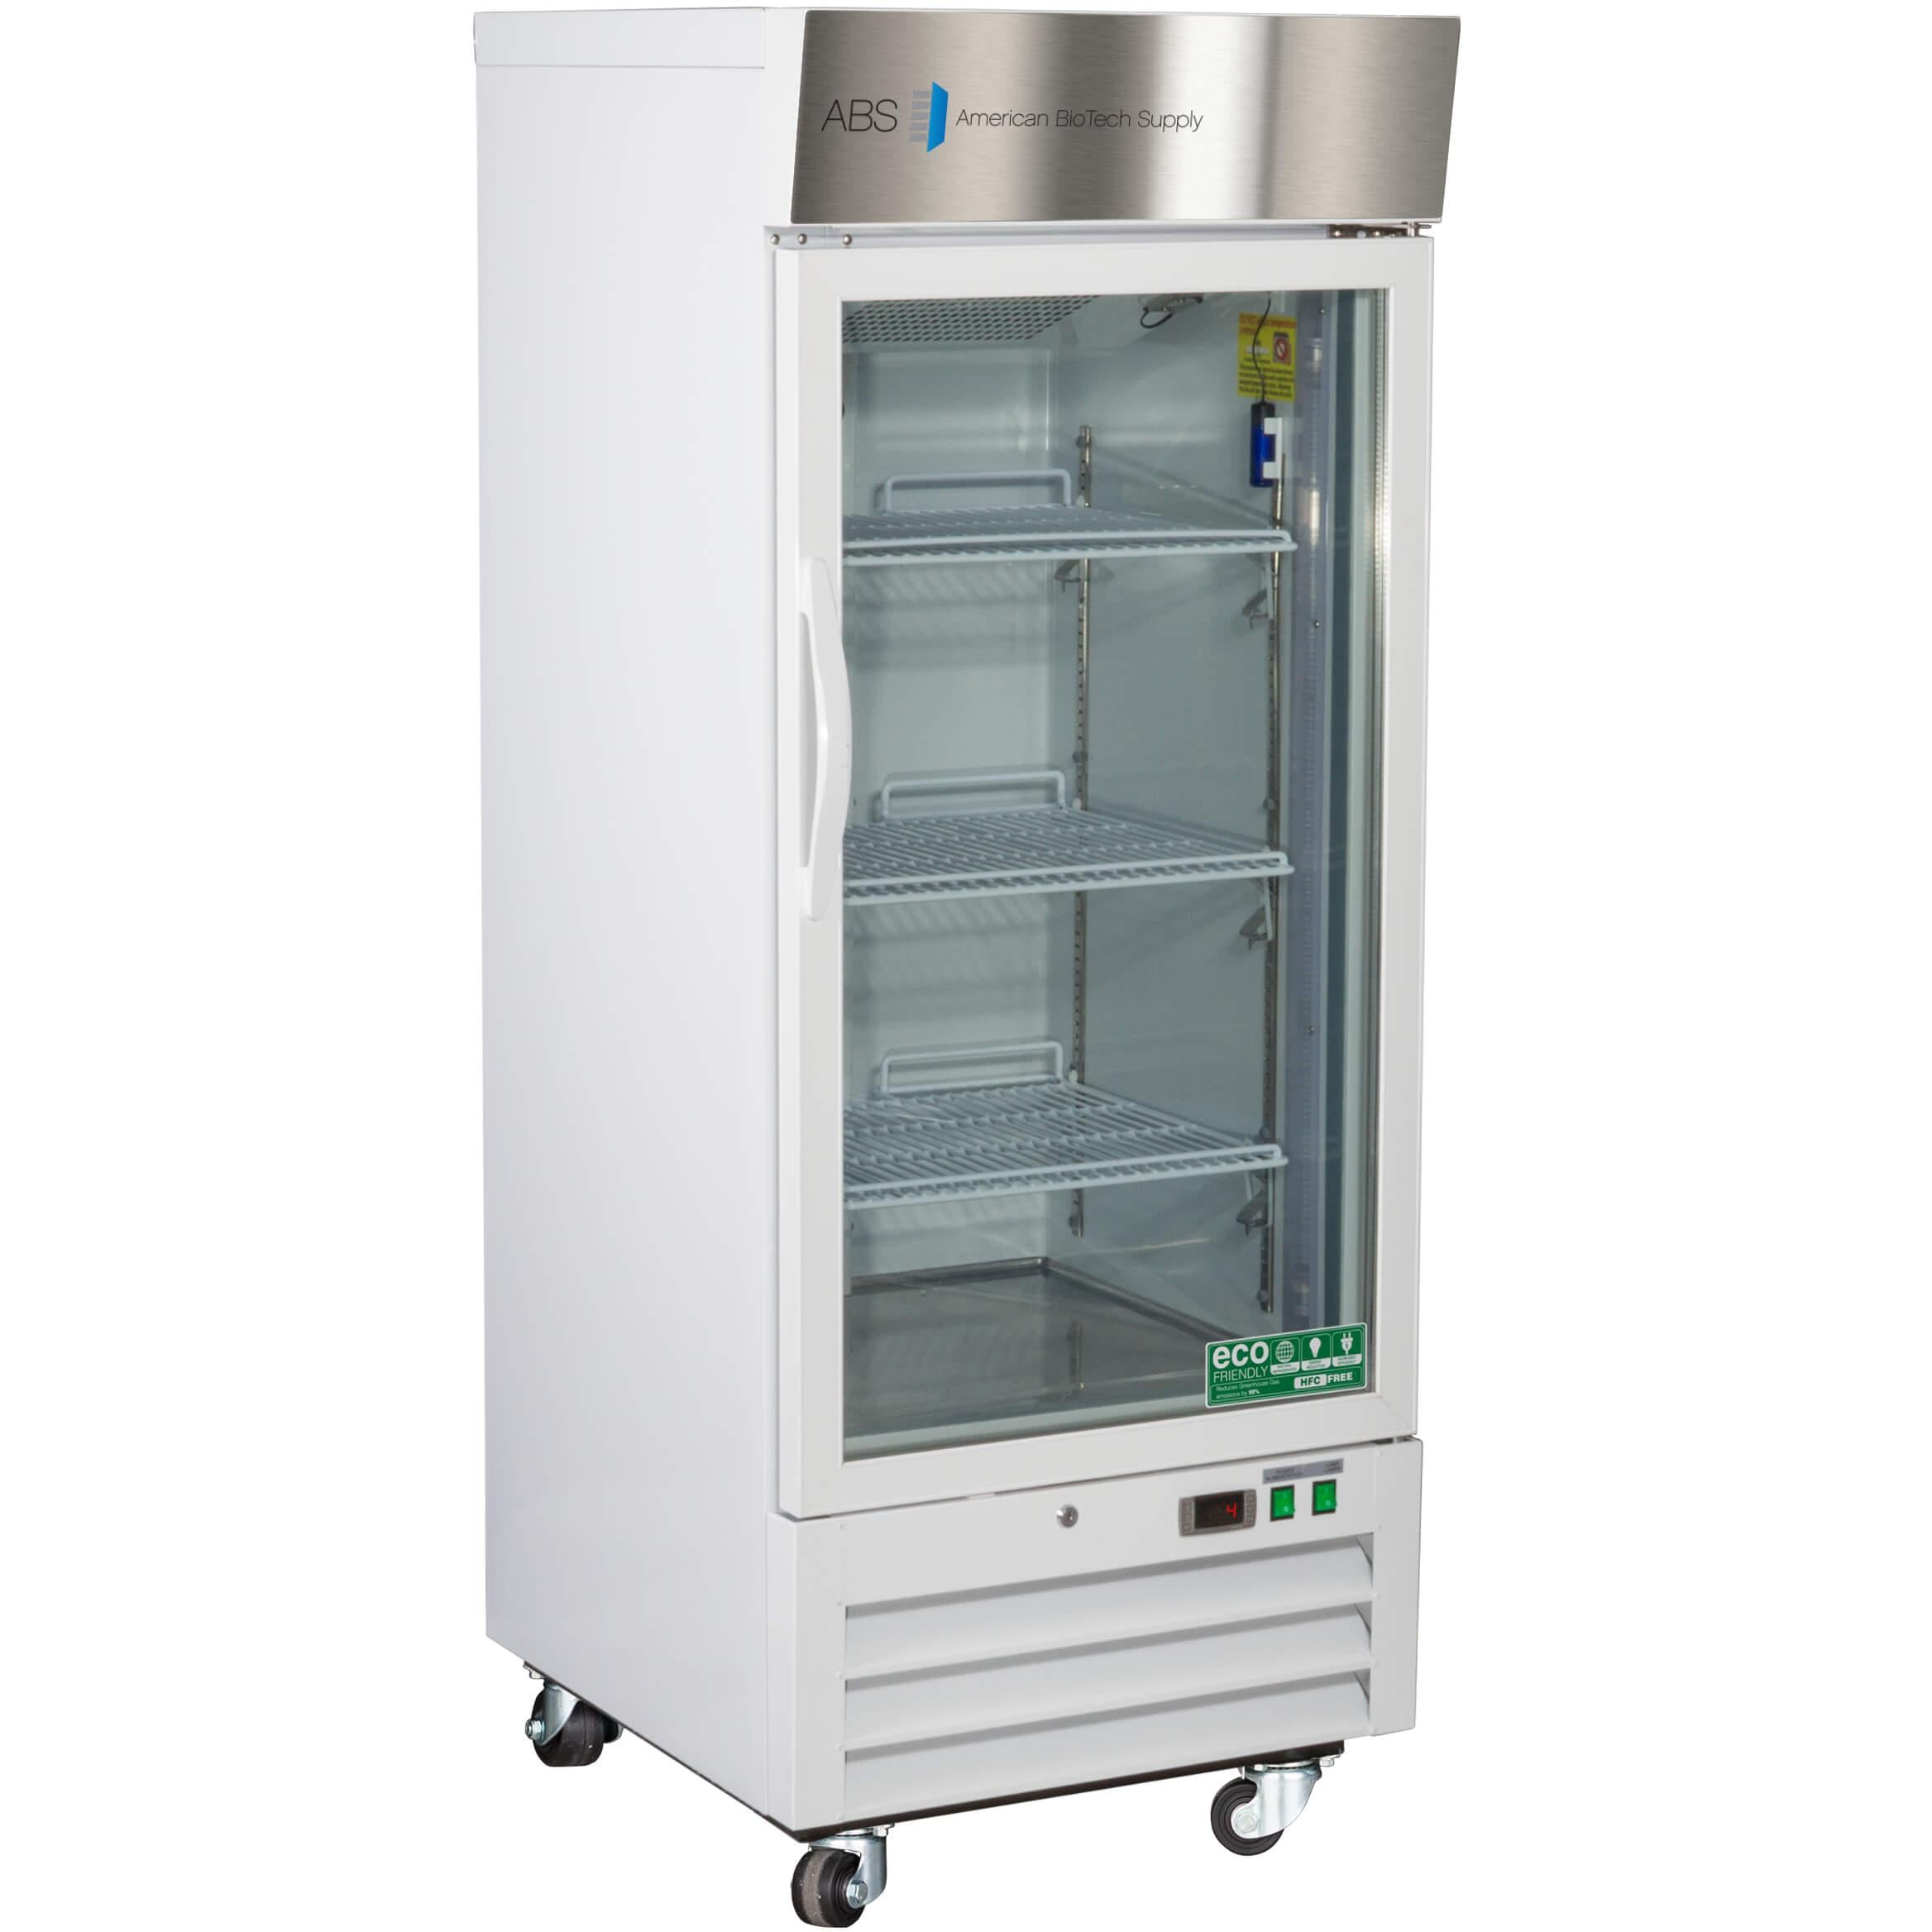 ABS Standard Laboratory Refrigerators